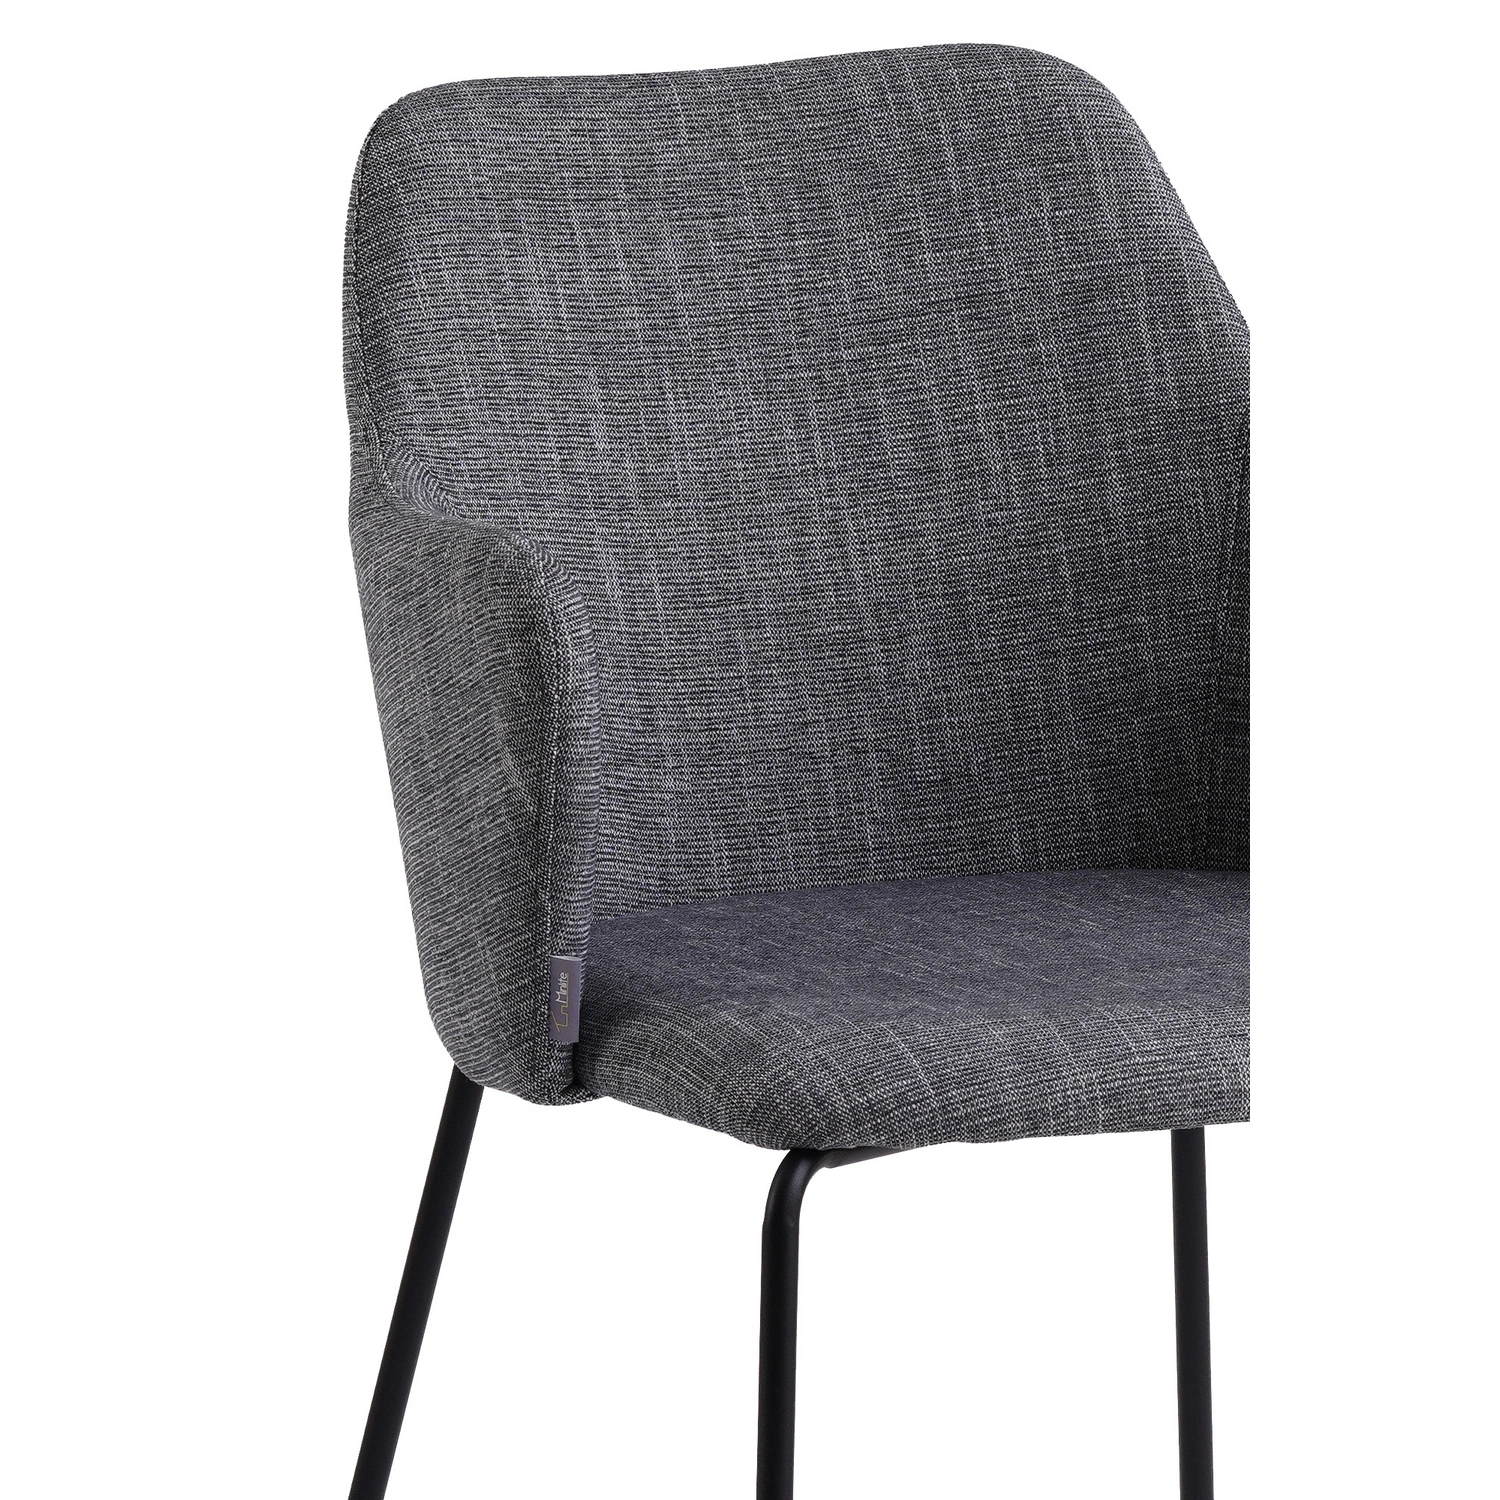 stk Höhe: grau/schwarz, 2 Stuhl, 85 SalesFever cm,